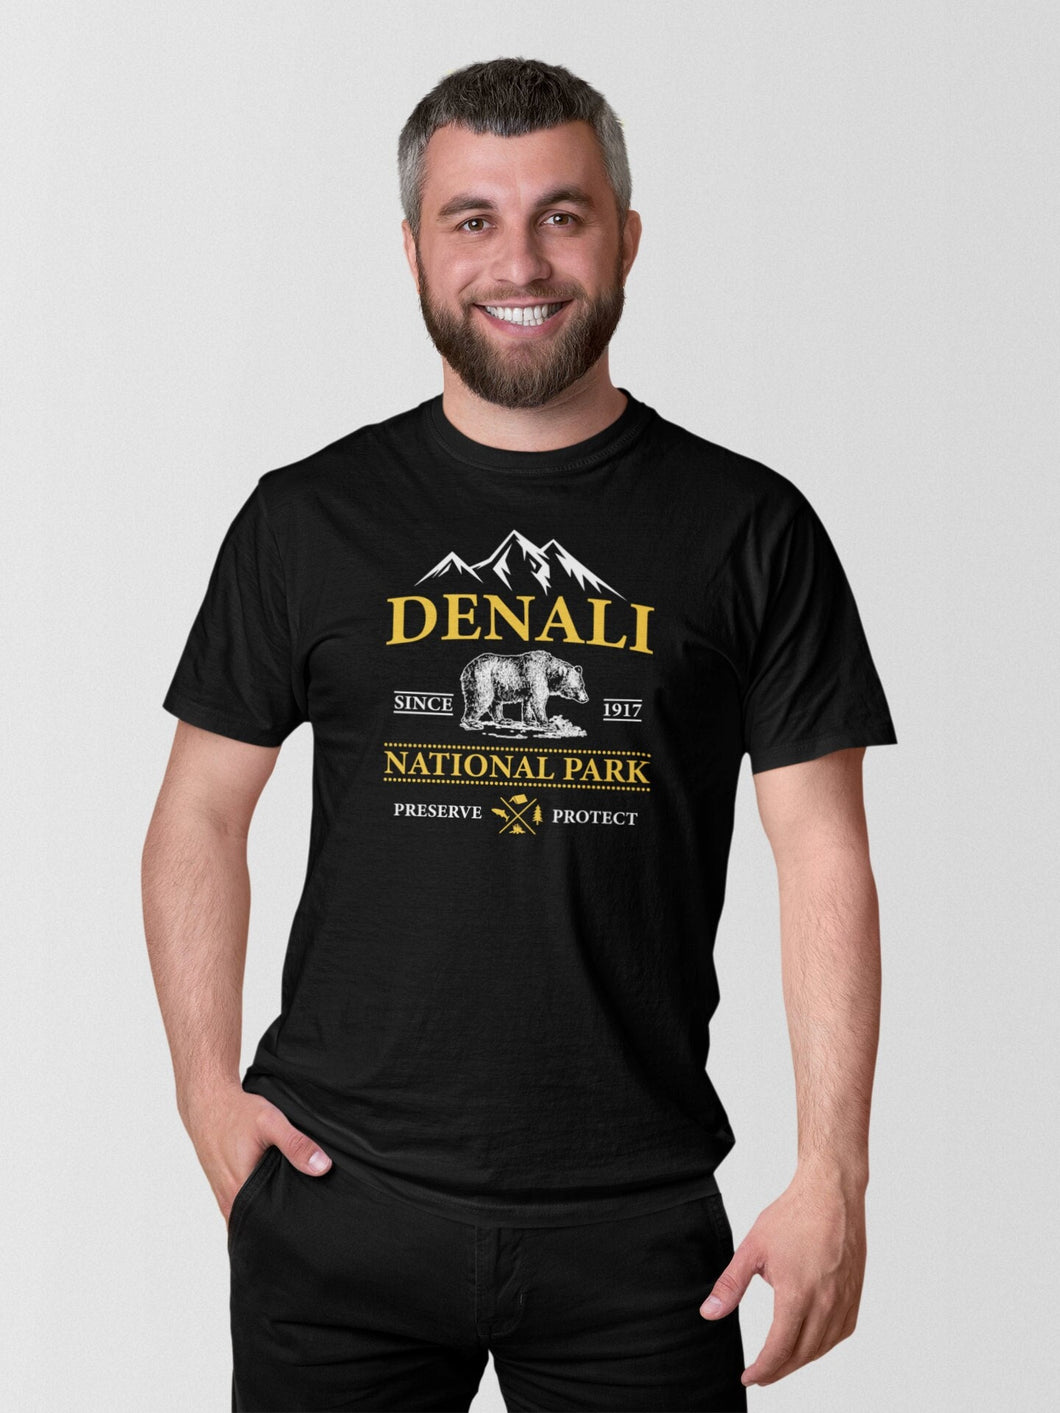 Denali National Park Shirt, Denali Alaska Shirt, Alaska State Shirt, Glacier Mountain Tee, Denali Shirt